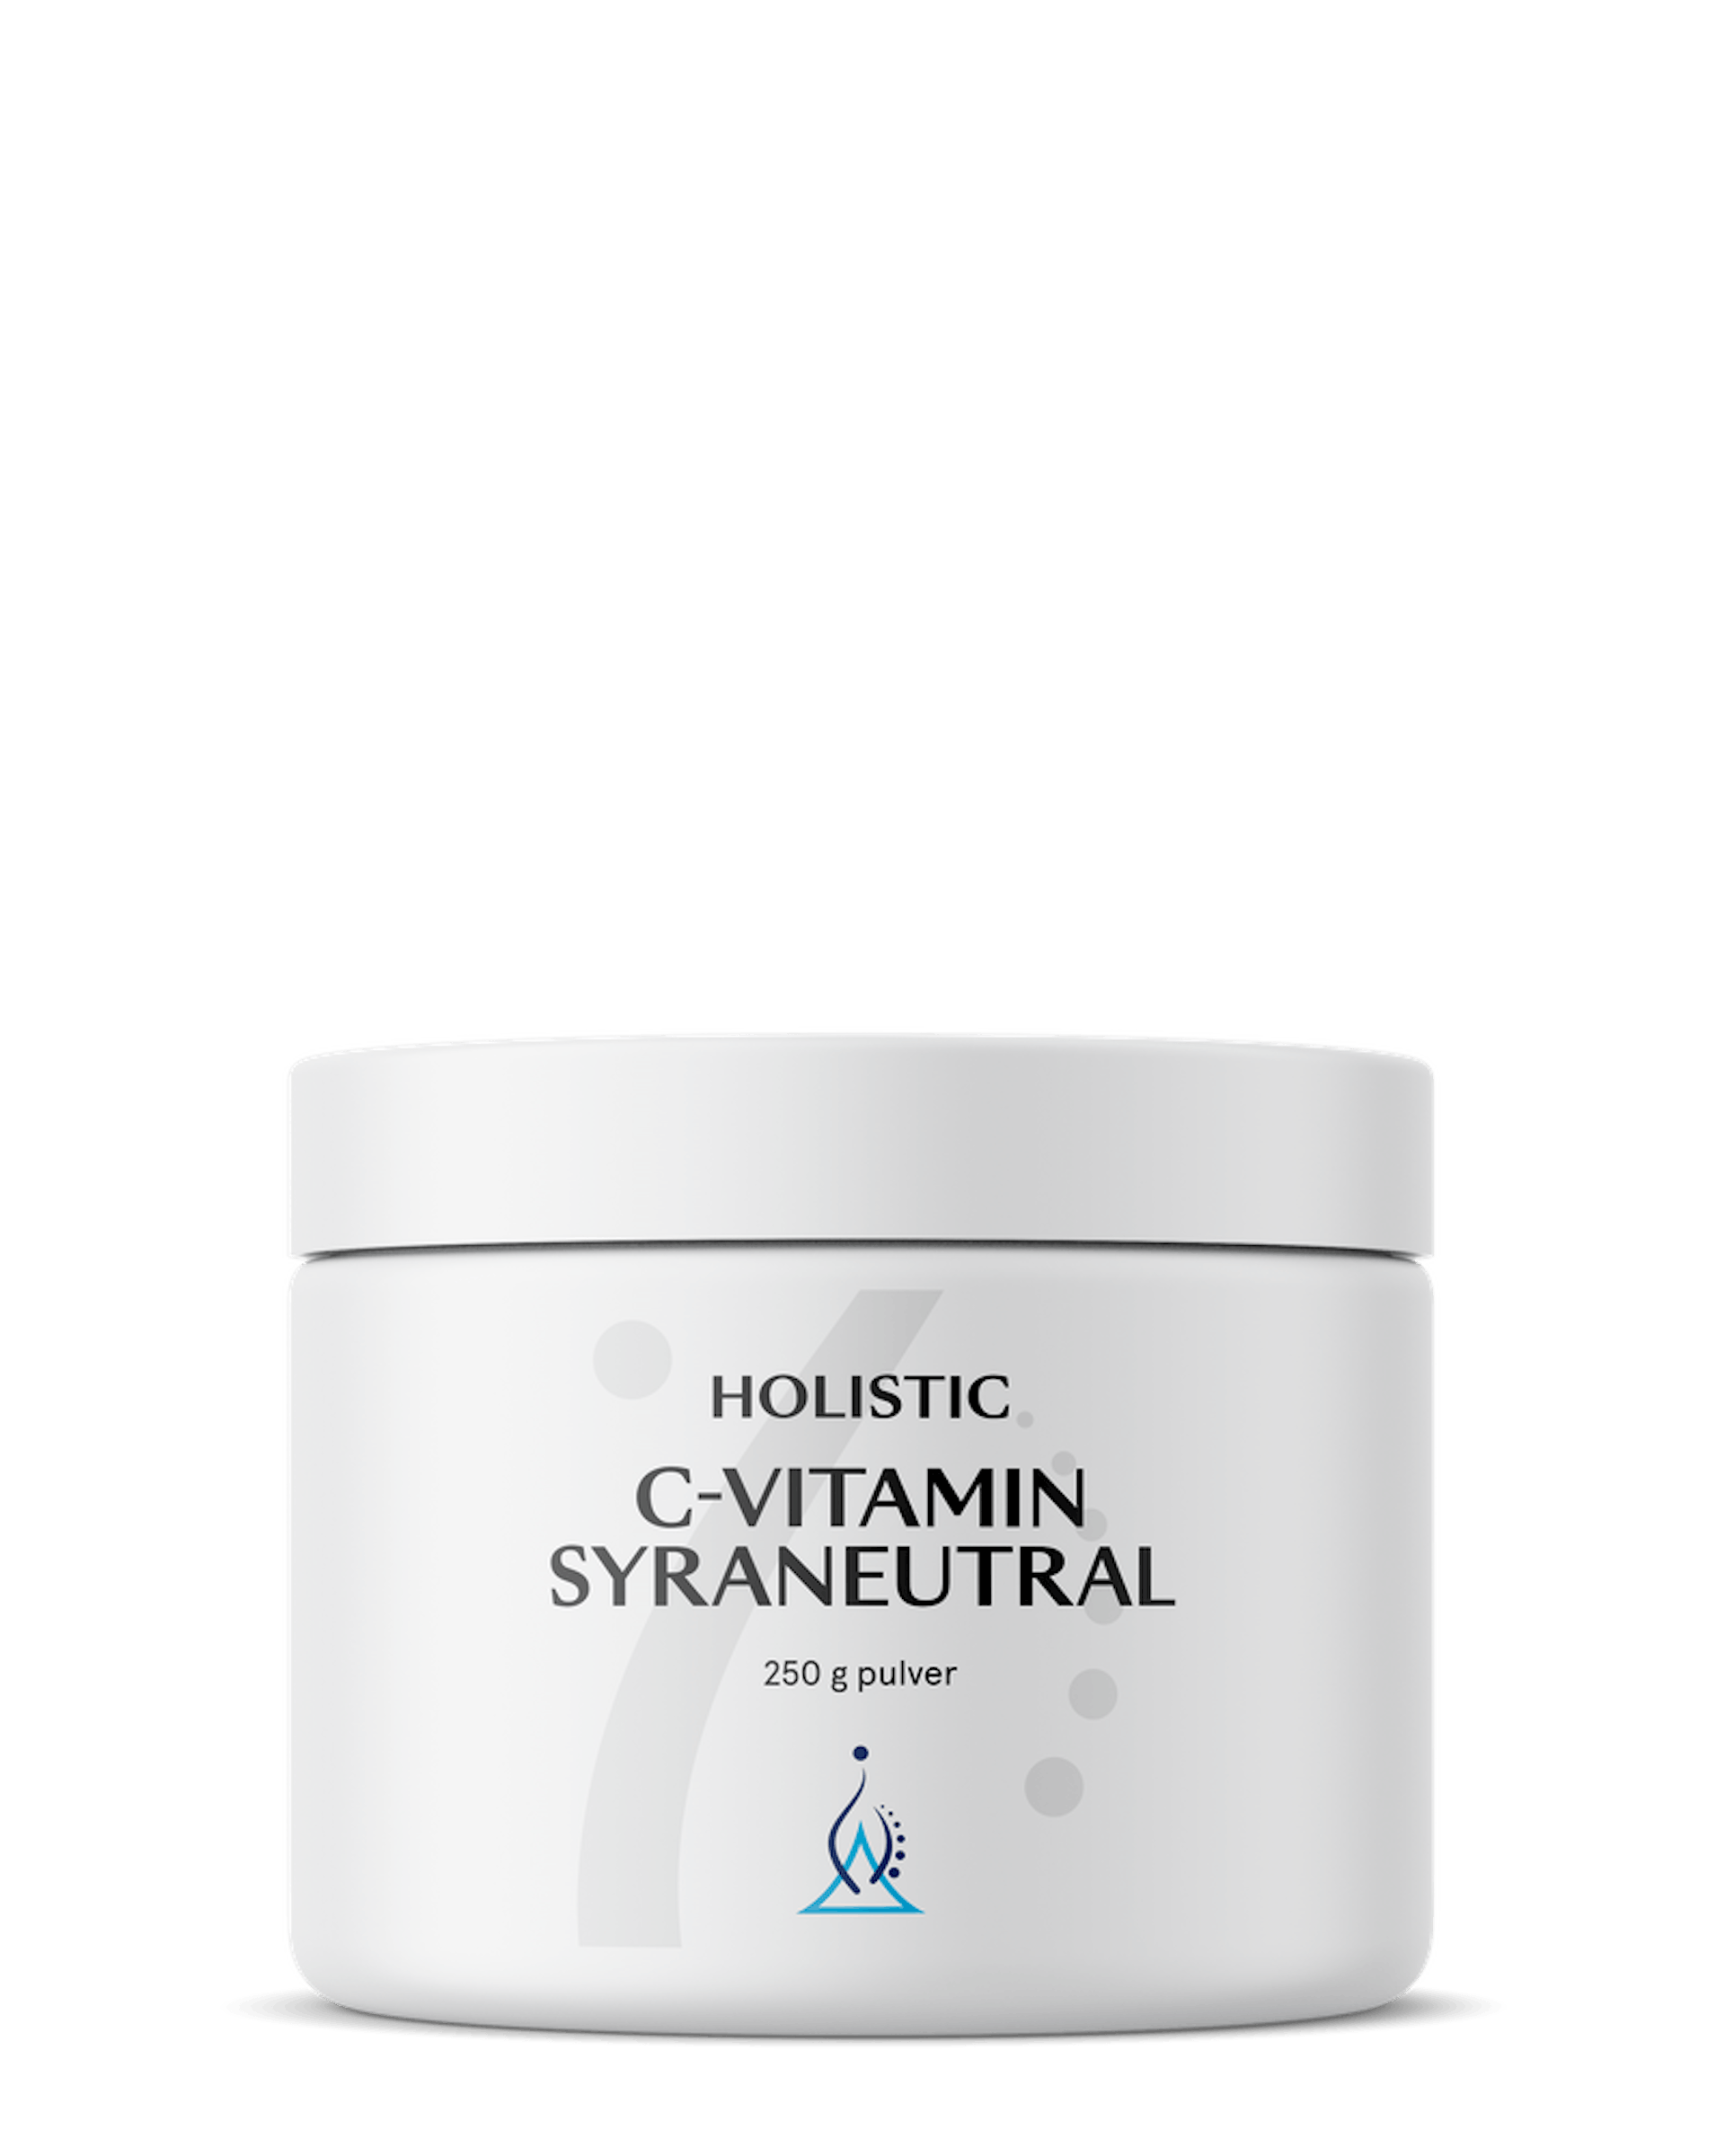 C-vitamin syraneutral, 250 g